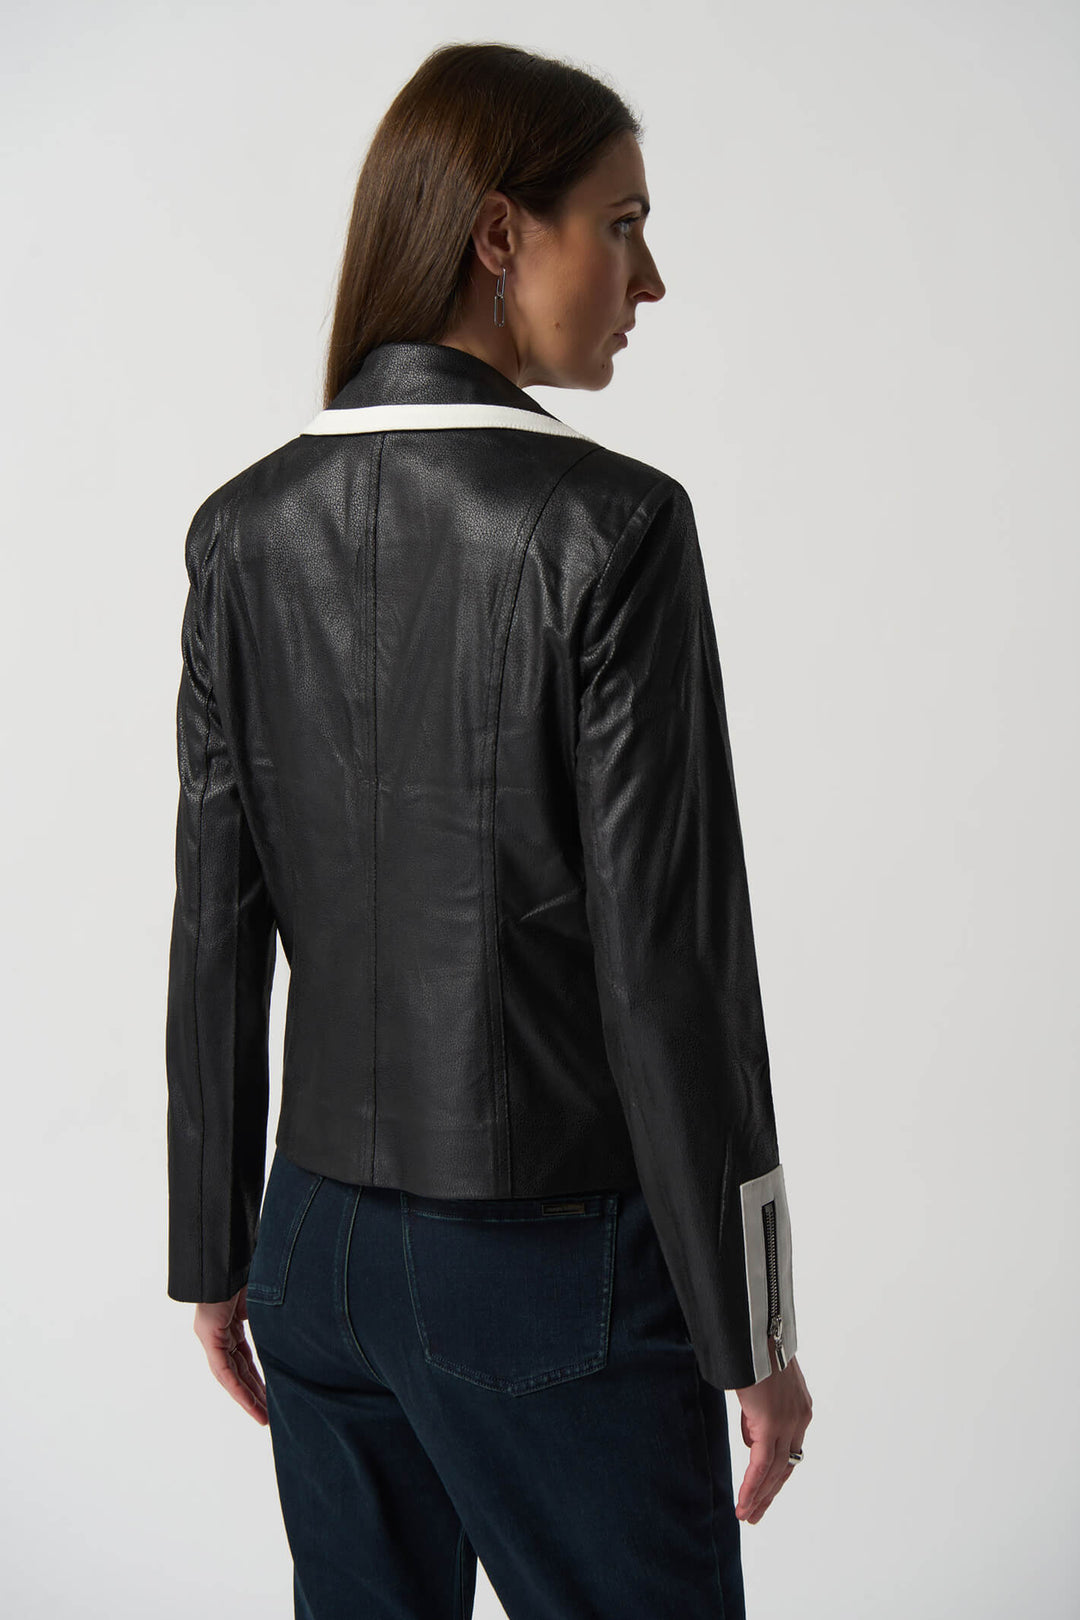 Joseph Ribkoff 233909 Black & Vanilla Edge Faux Leather Jacket - Experience Boutique